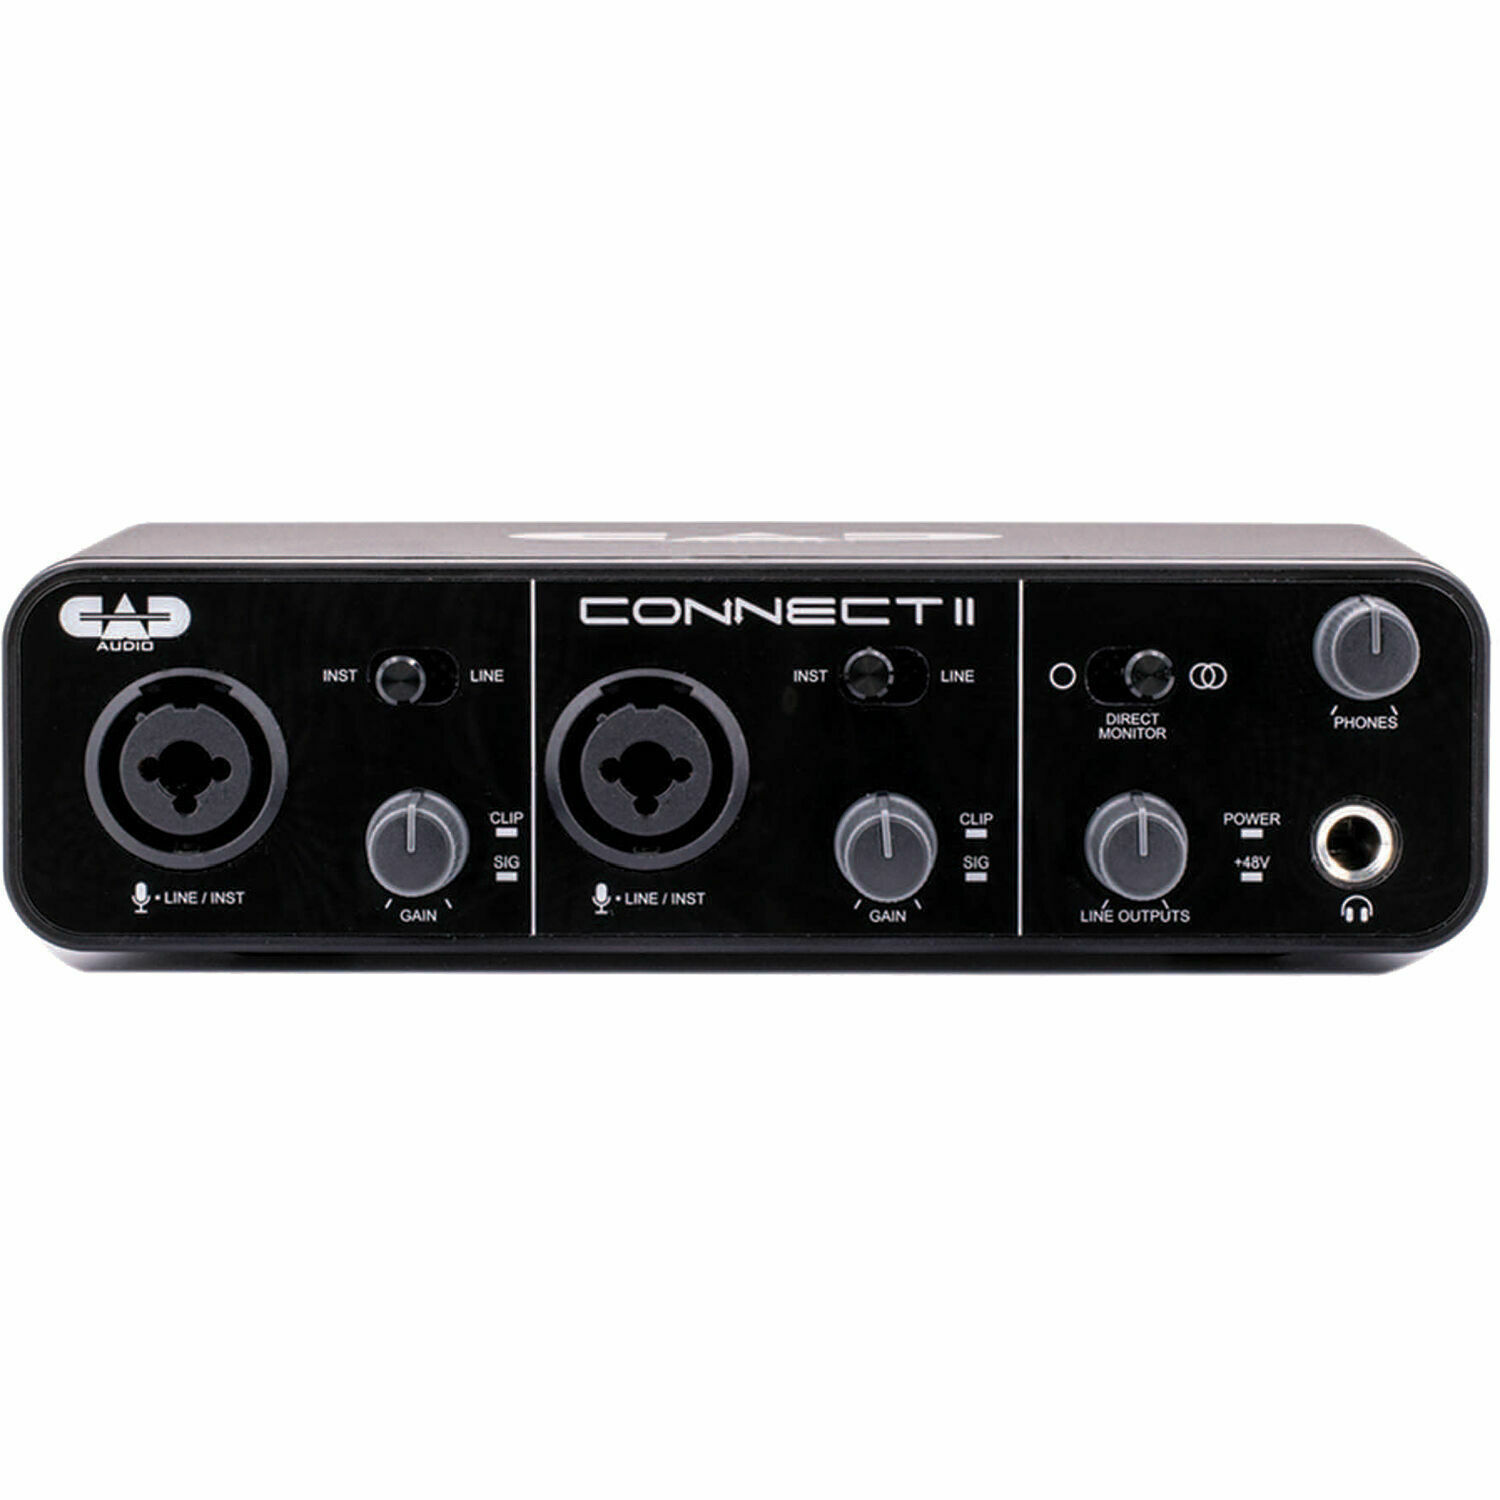 CAD - CX2 - Connect II 2x2 USB Audio Interface - $79.95